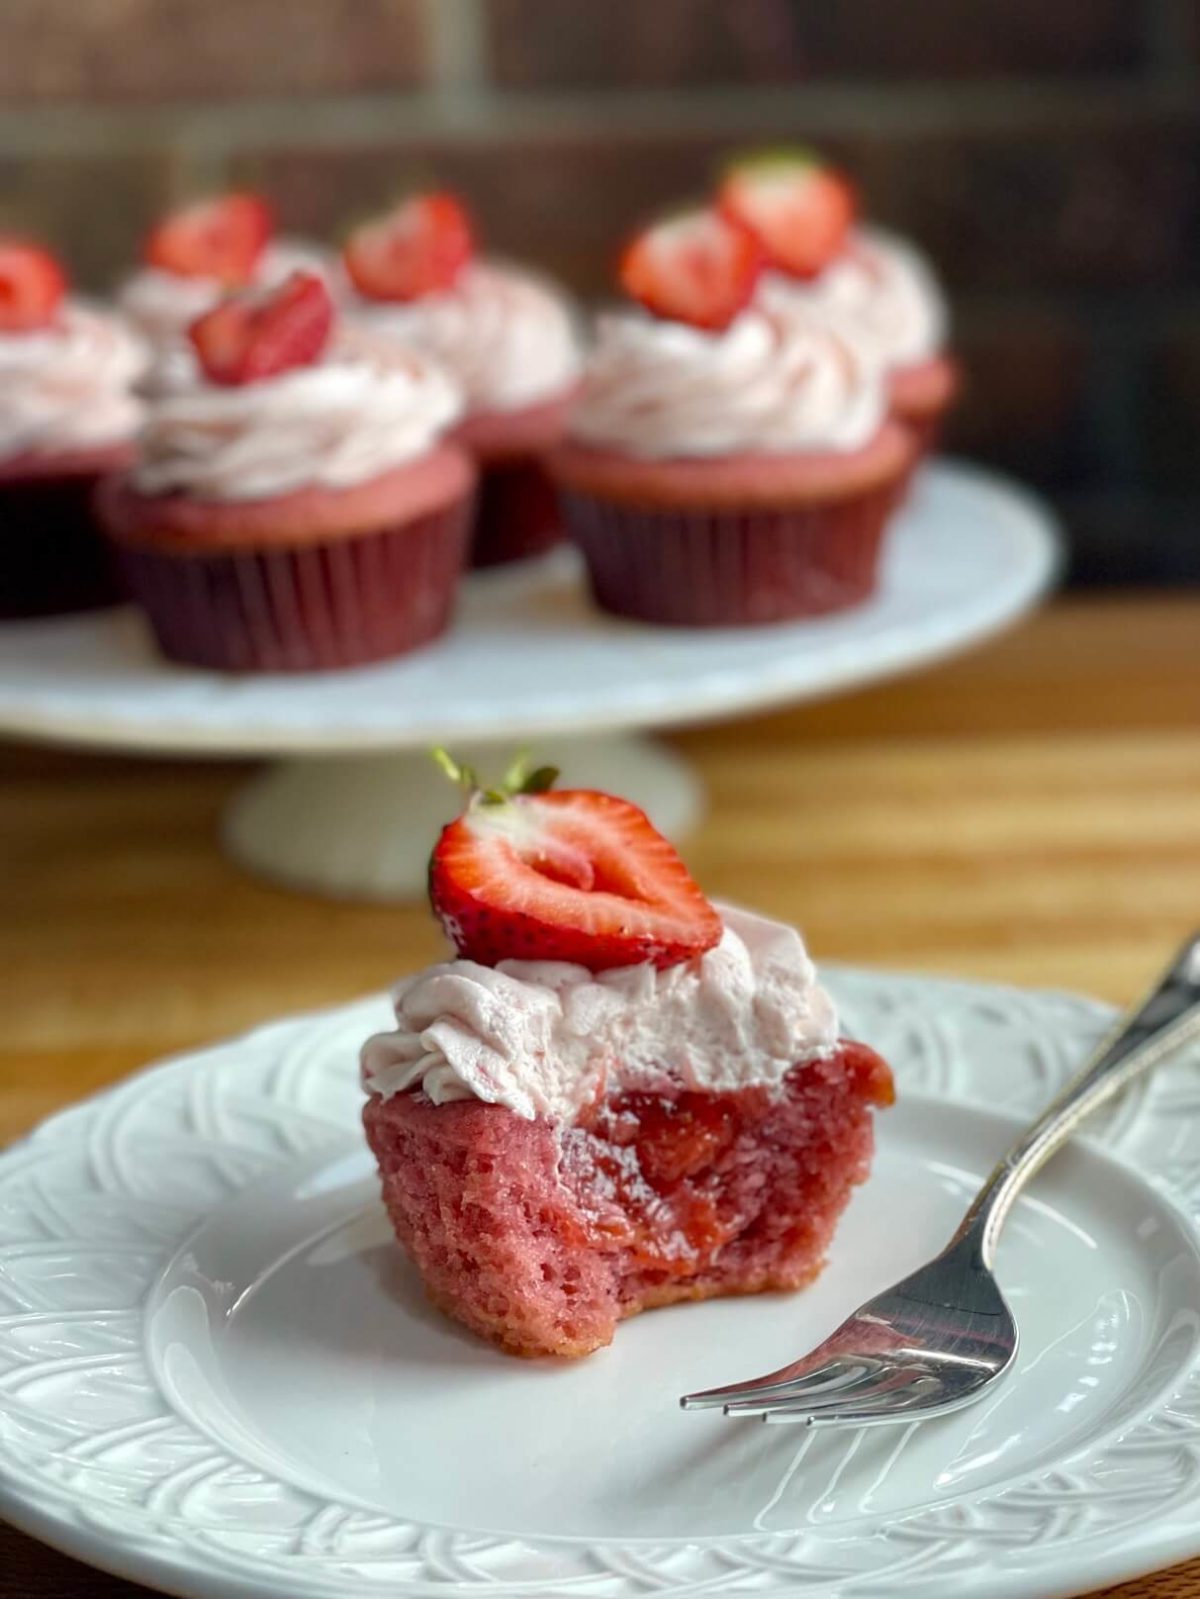 Triple Strawberry Cupcakes A Bakery Recipe Amycakes Bakes 